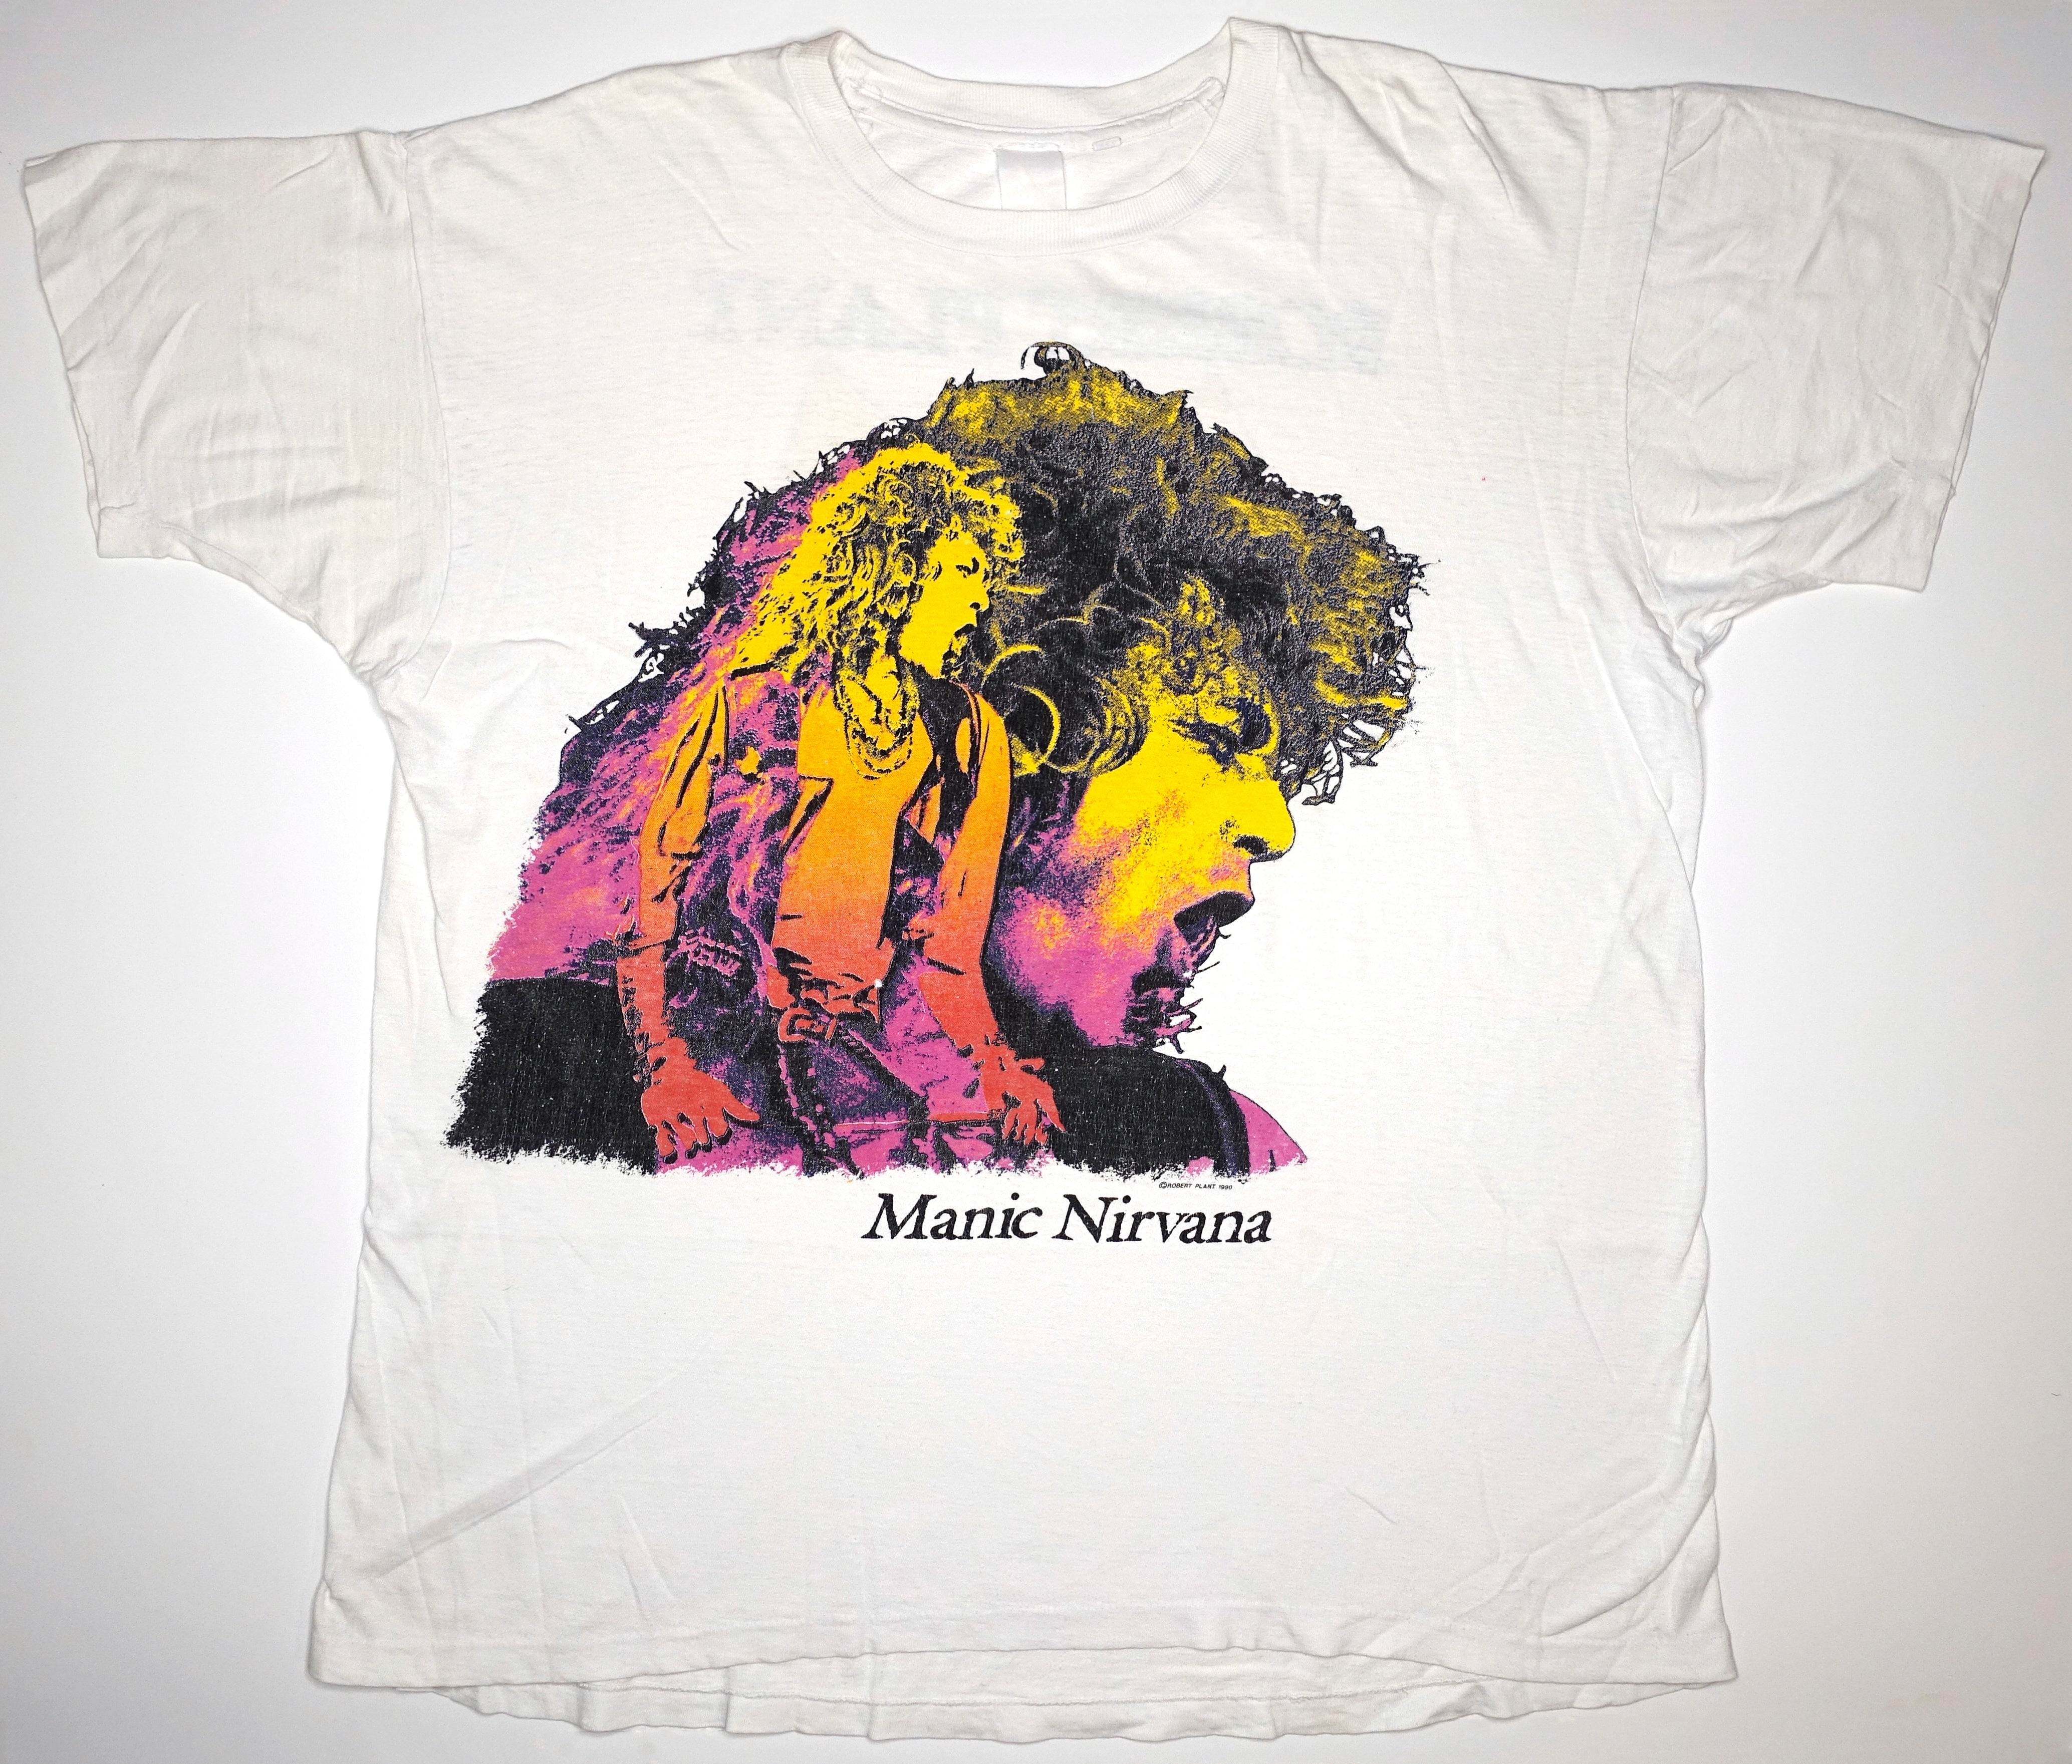 Robert Plant - Manic Nirvana 1990 Tour Shirt Size XL